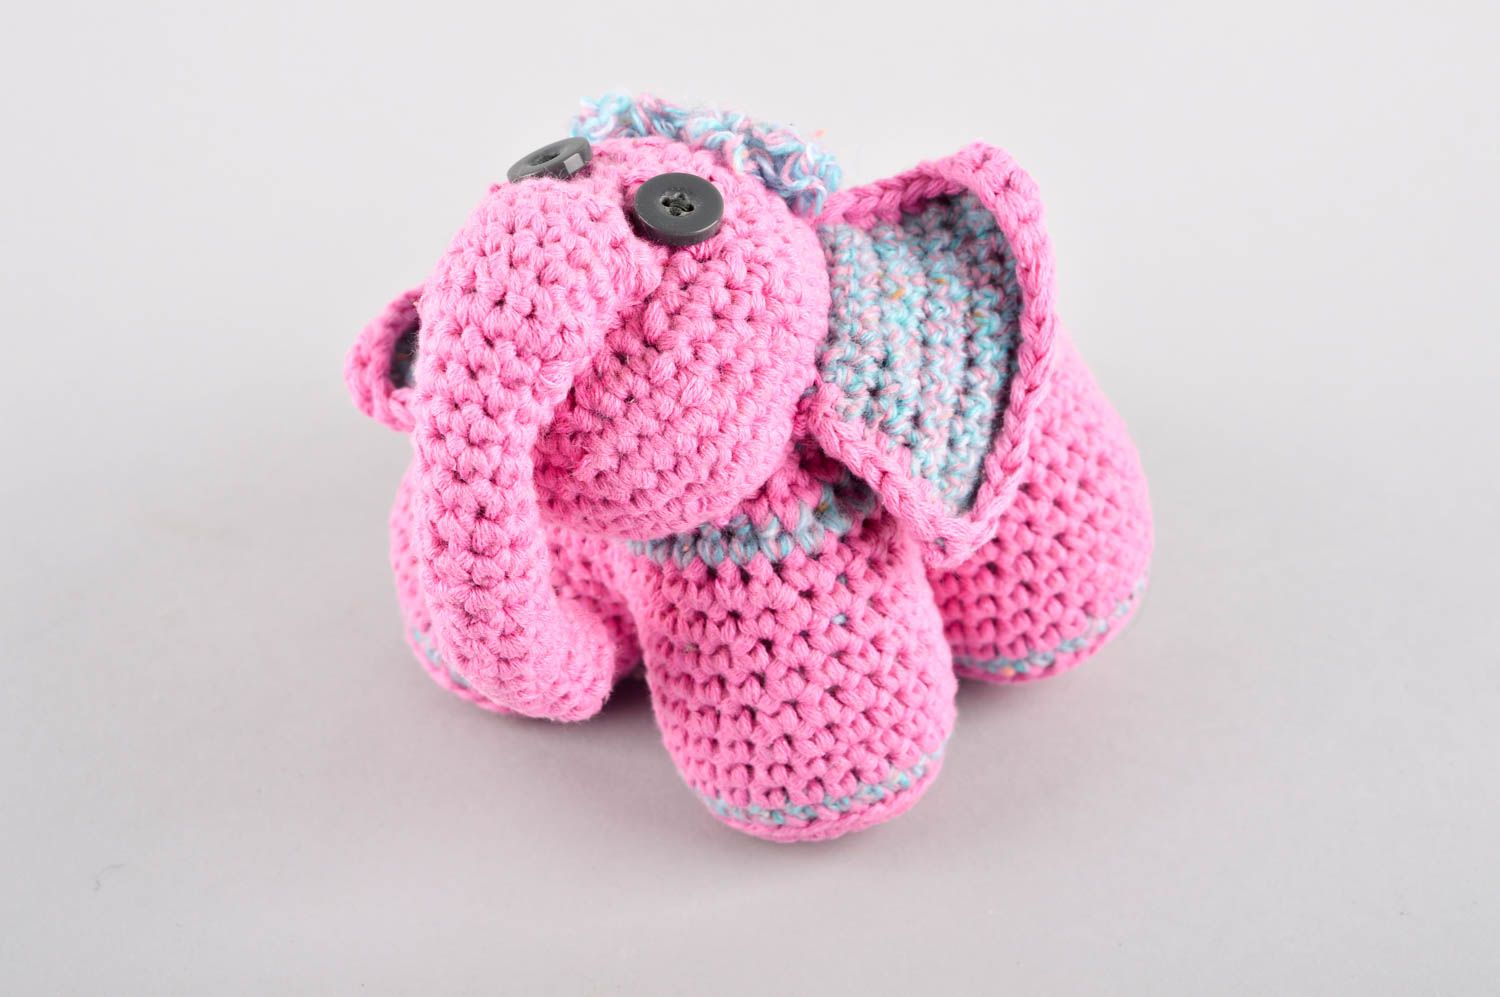 Handmade toy stuffed toy crocheted toy for babies soft nursery decor photo 2